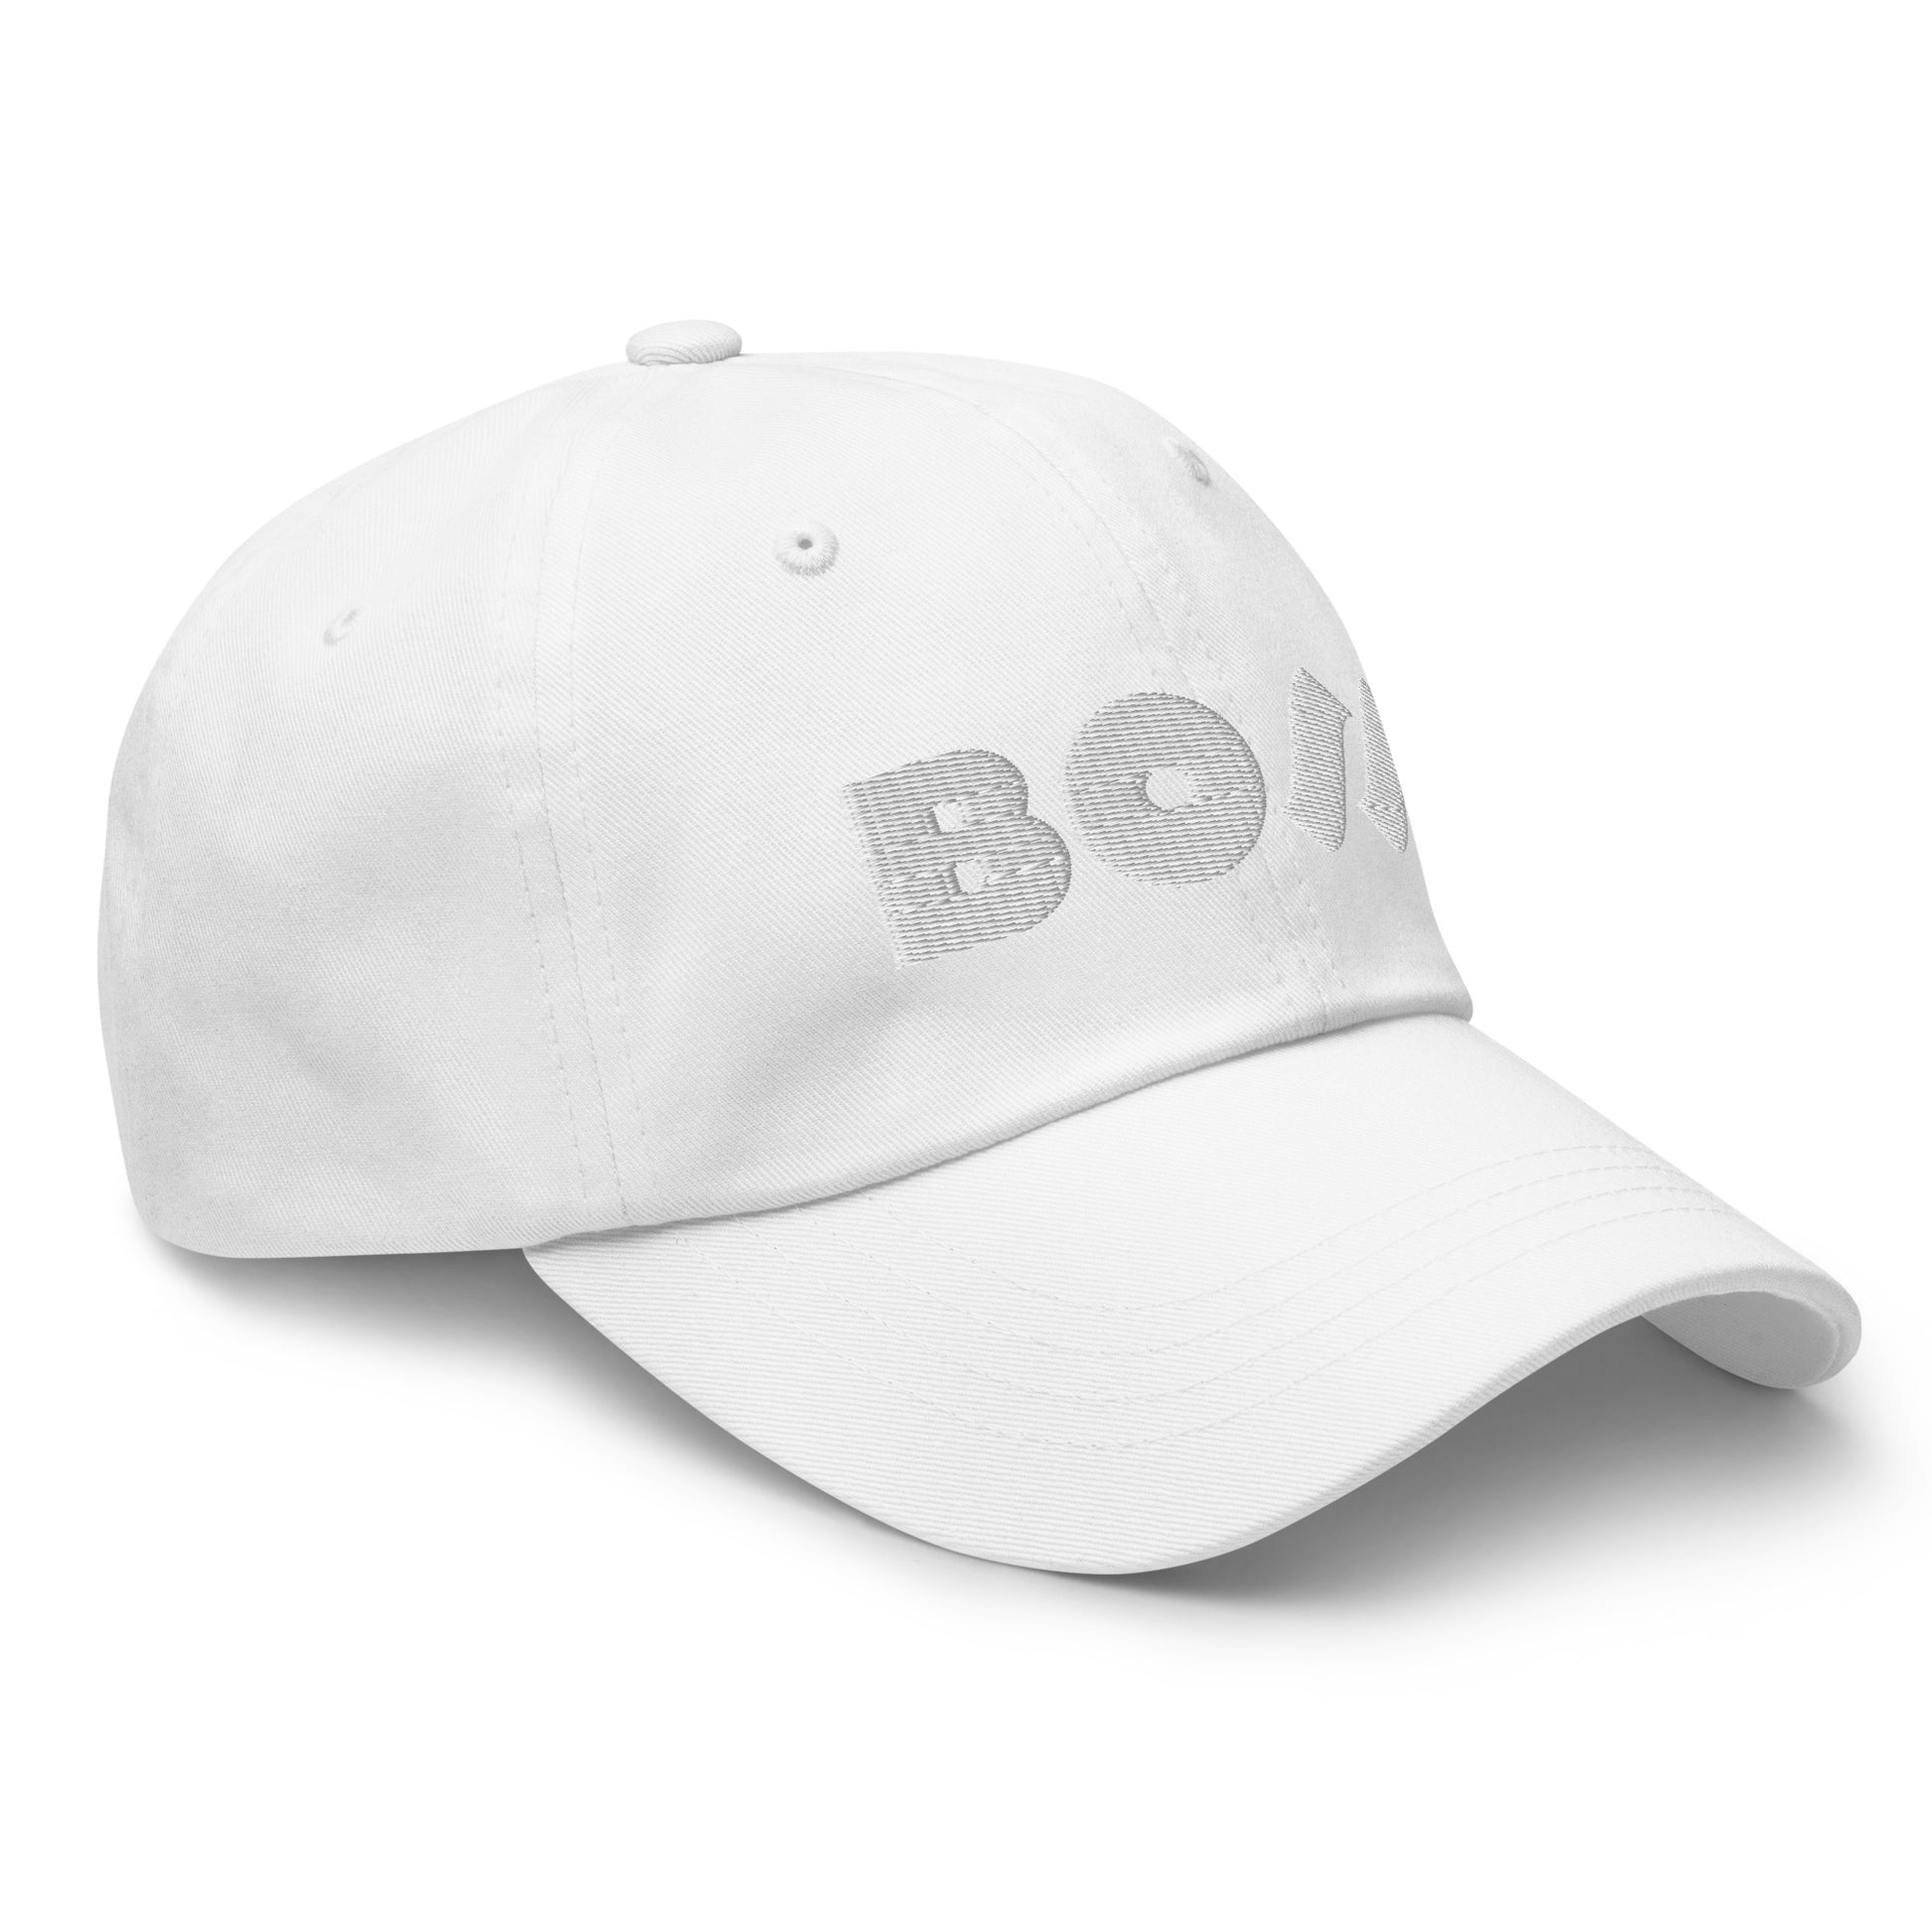 BOSS Dad Hat - RTS Collaborative